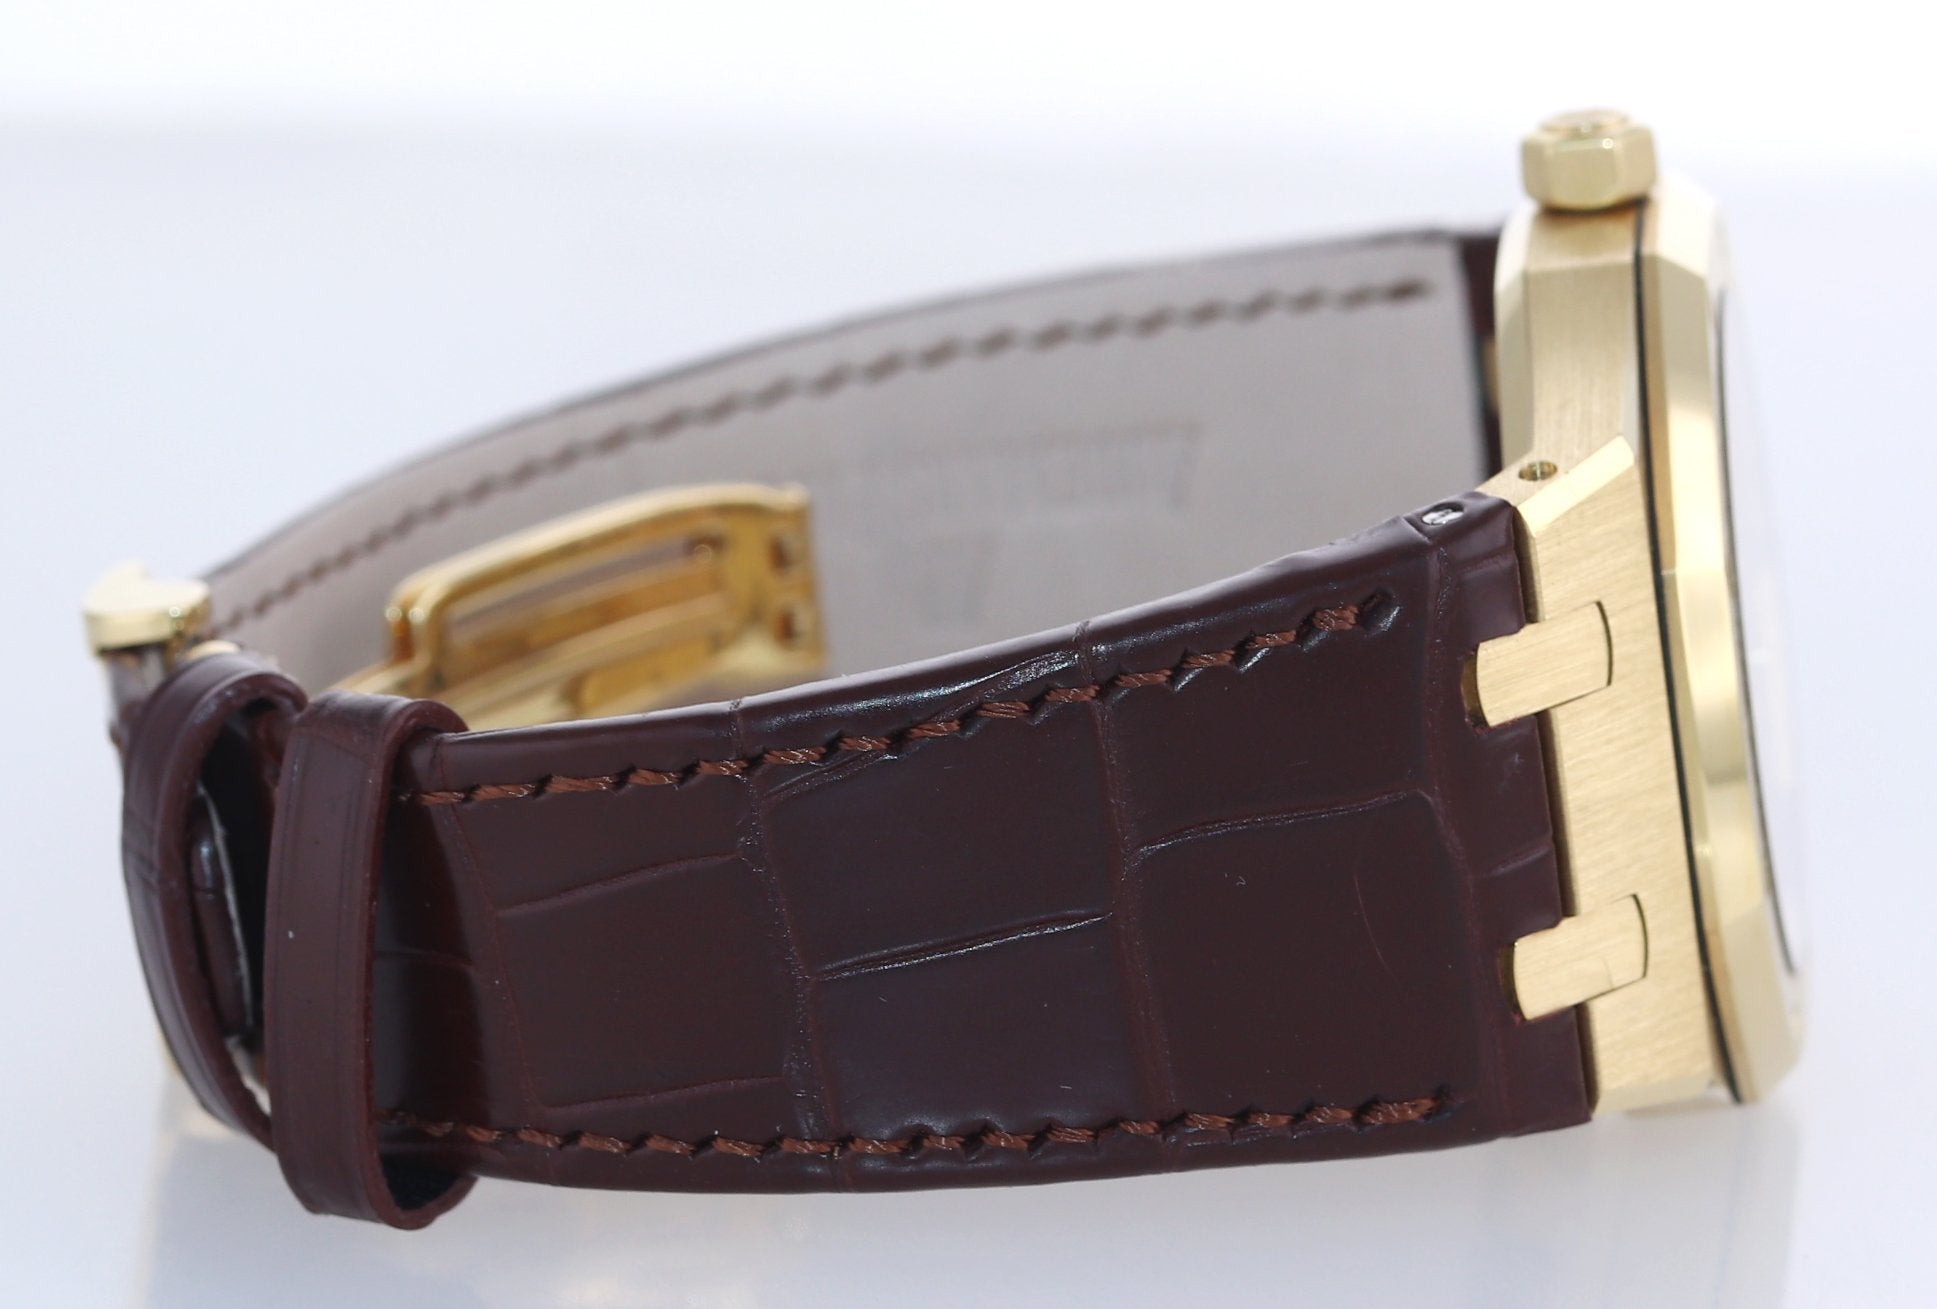 Audemars Piguet AP Royal Oak 18K Rose Gold 15300 39mm White Leather Watch